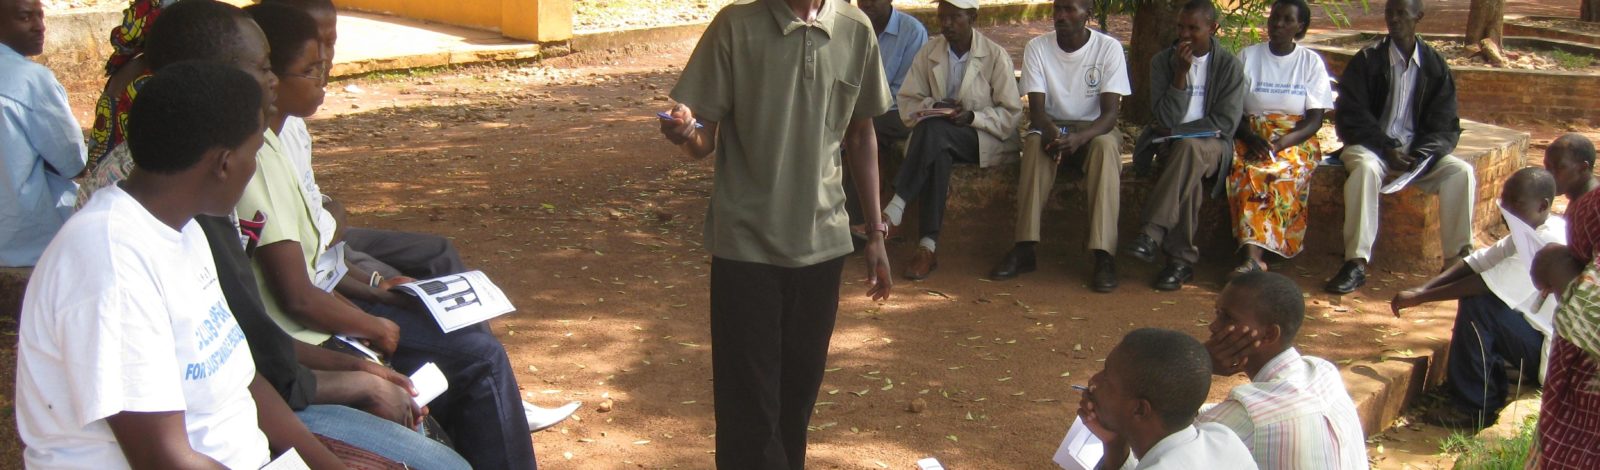 Renforcer la prise en charge psycho-sociale des traumatismes au Rwanda